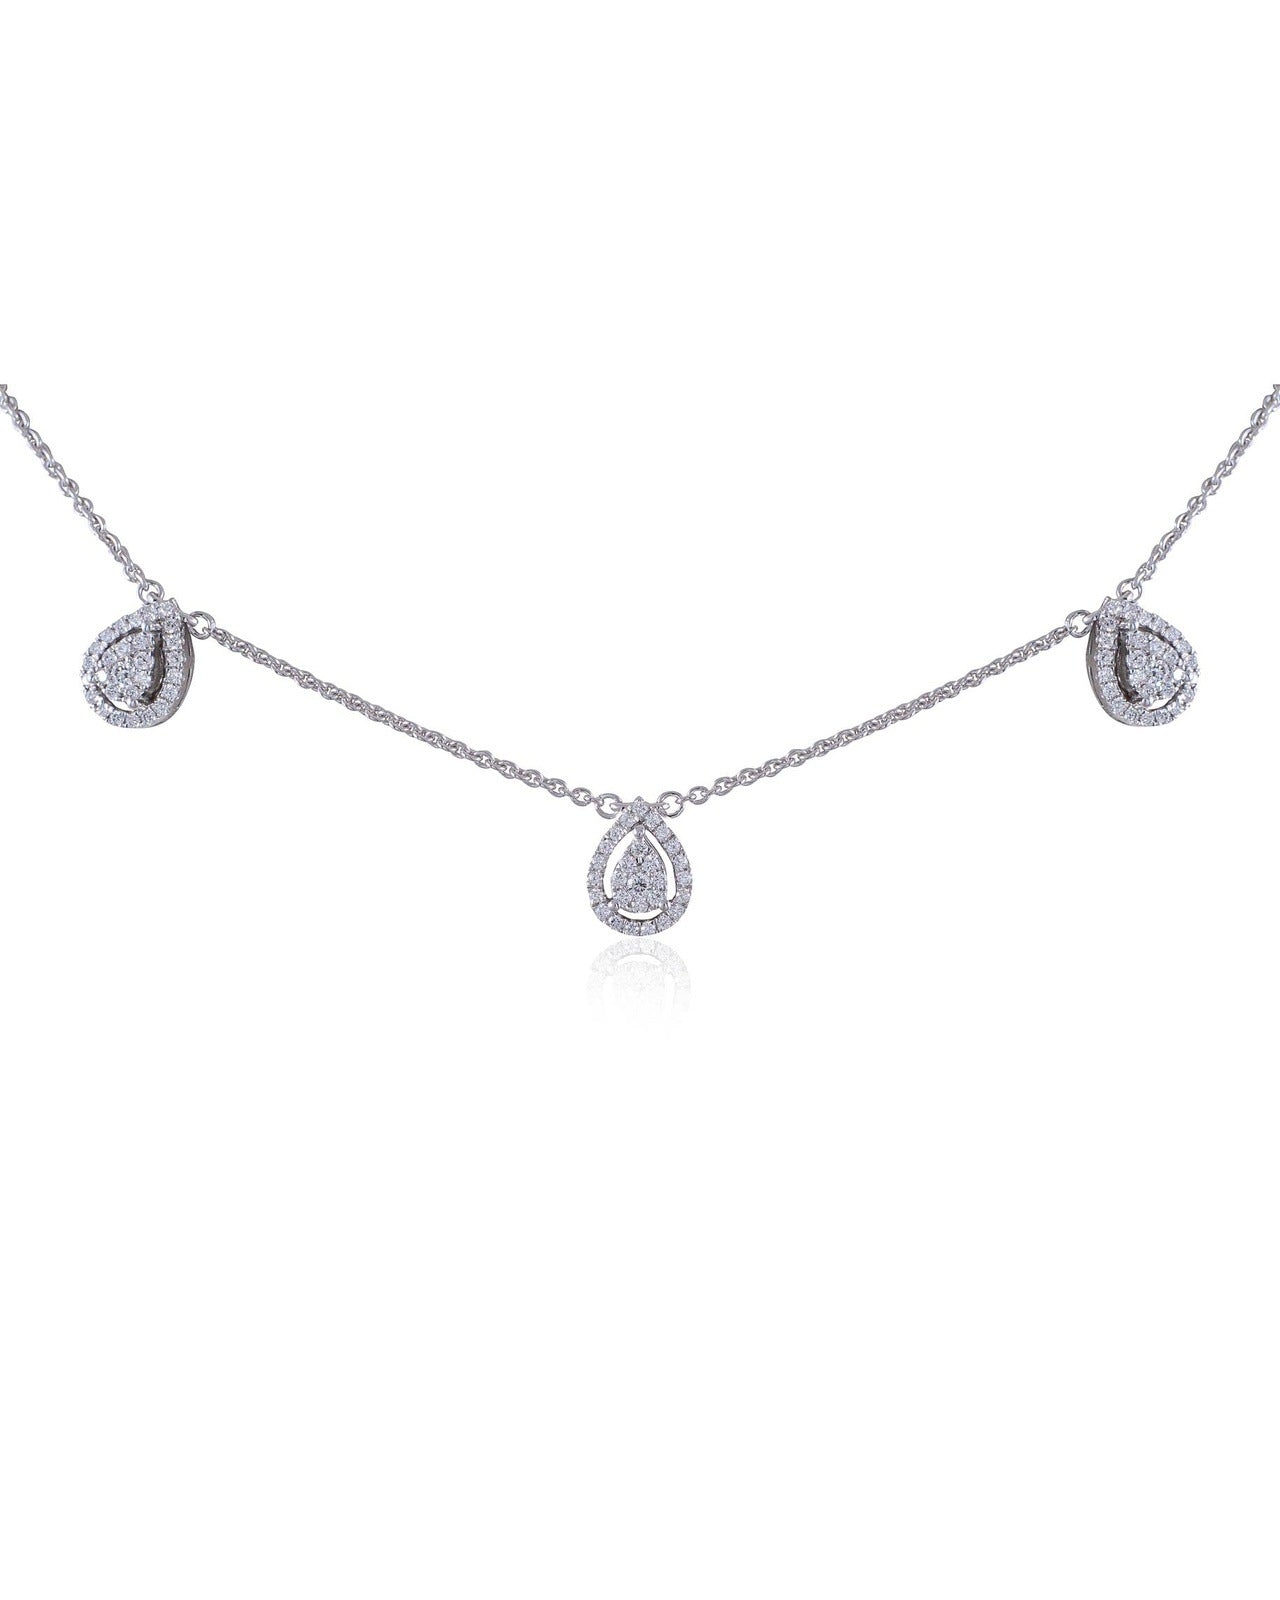 Diamond Necklace - NO ORDERS